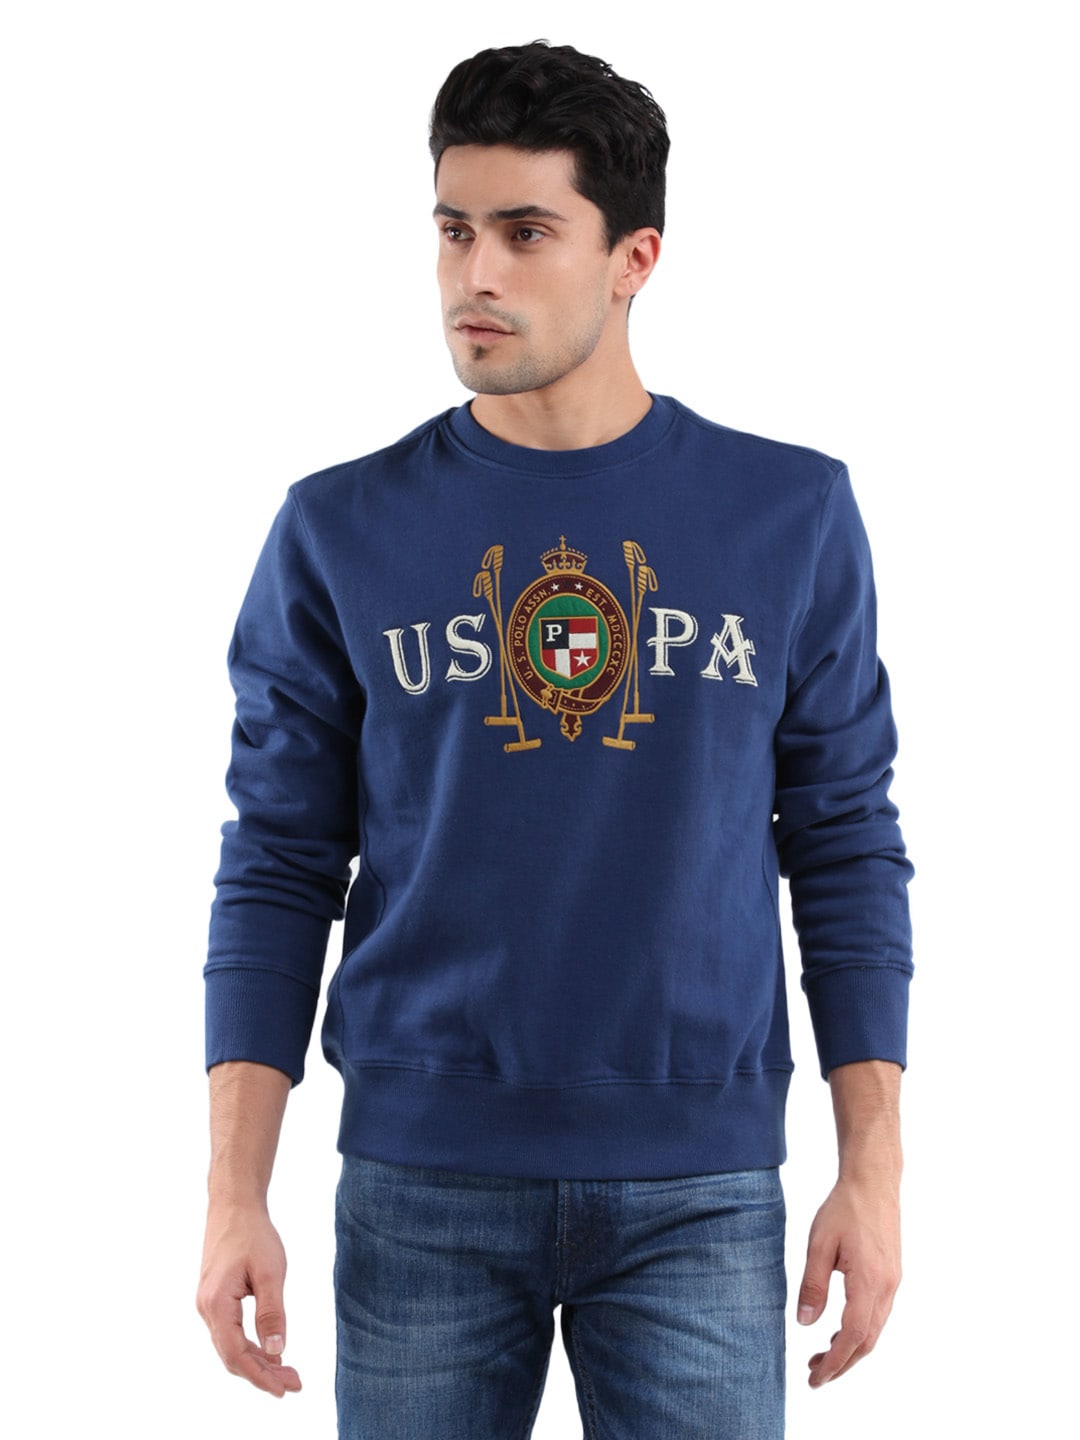 U.S. Polo Assn. Men Solid Blue Sweatshirt